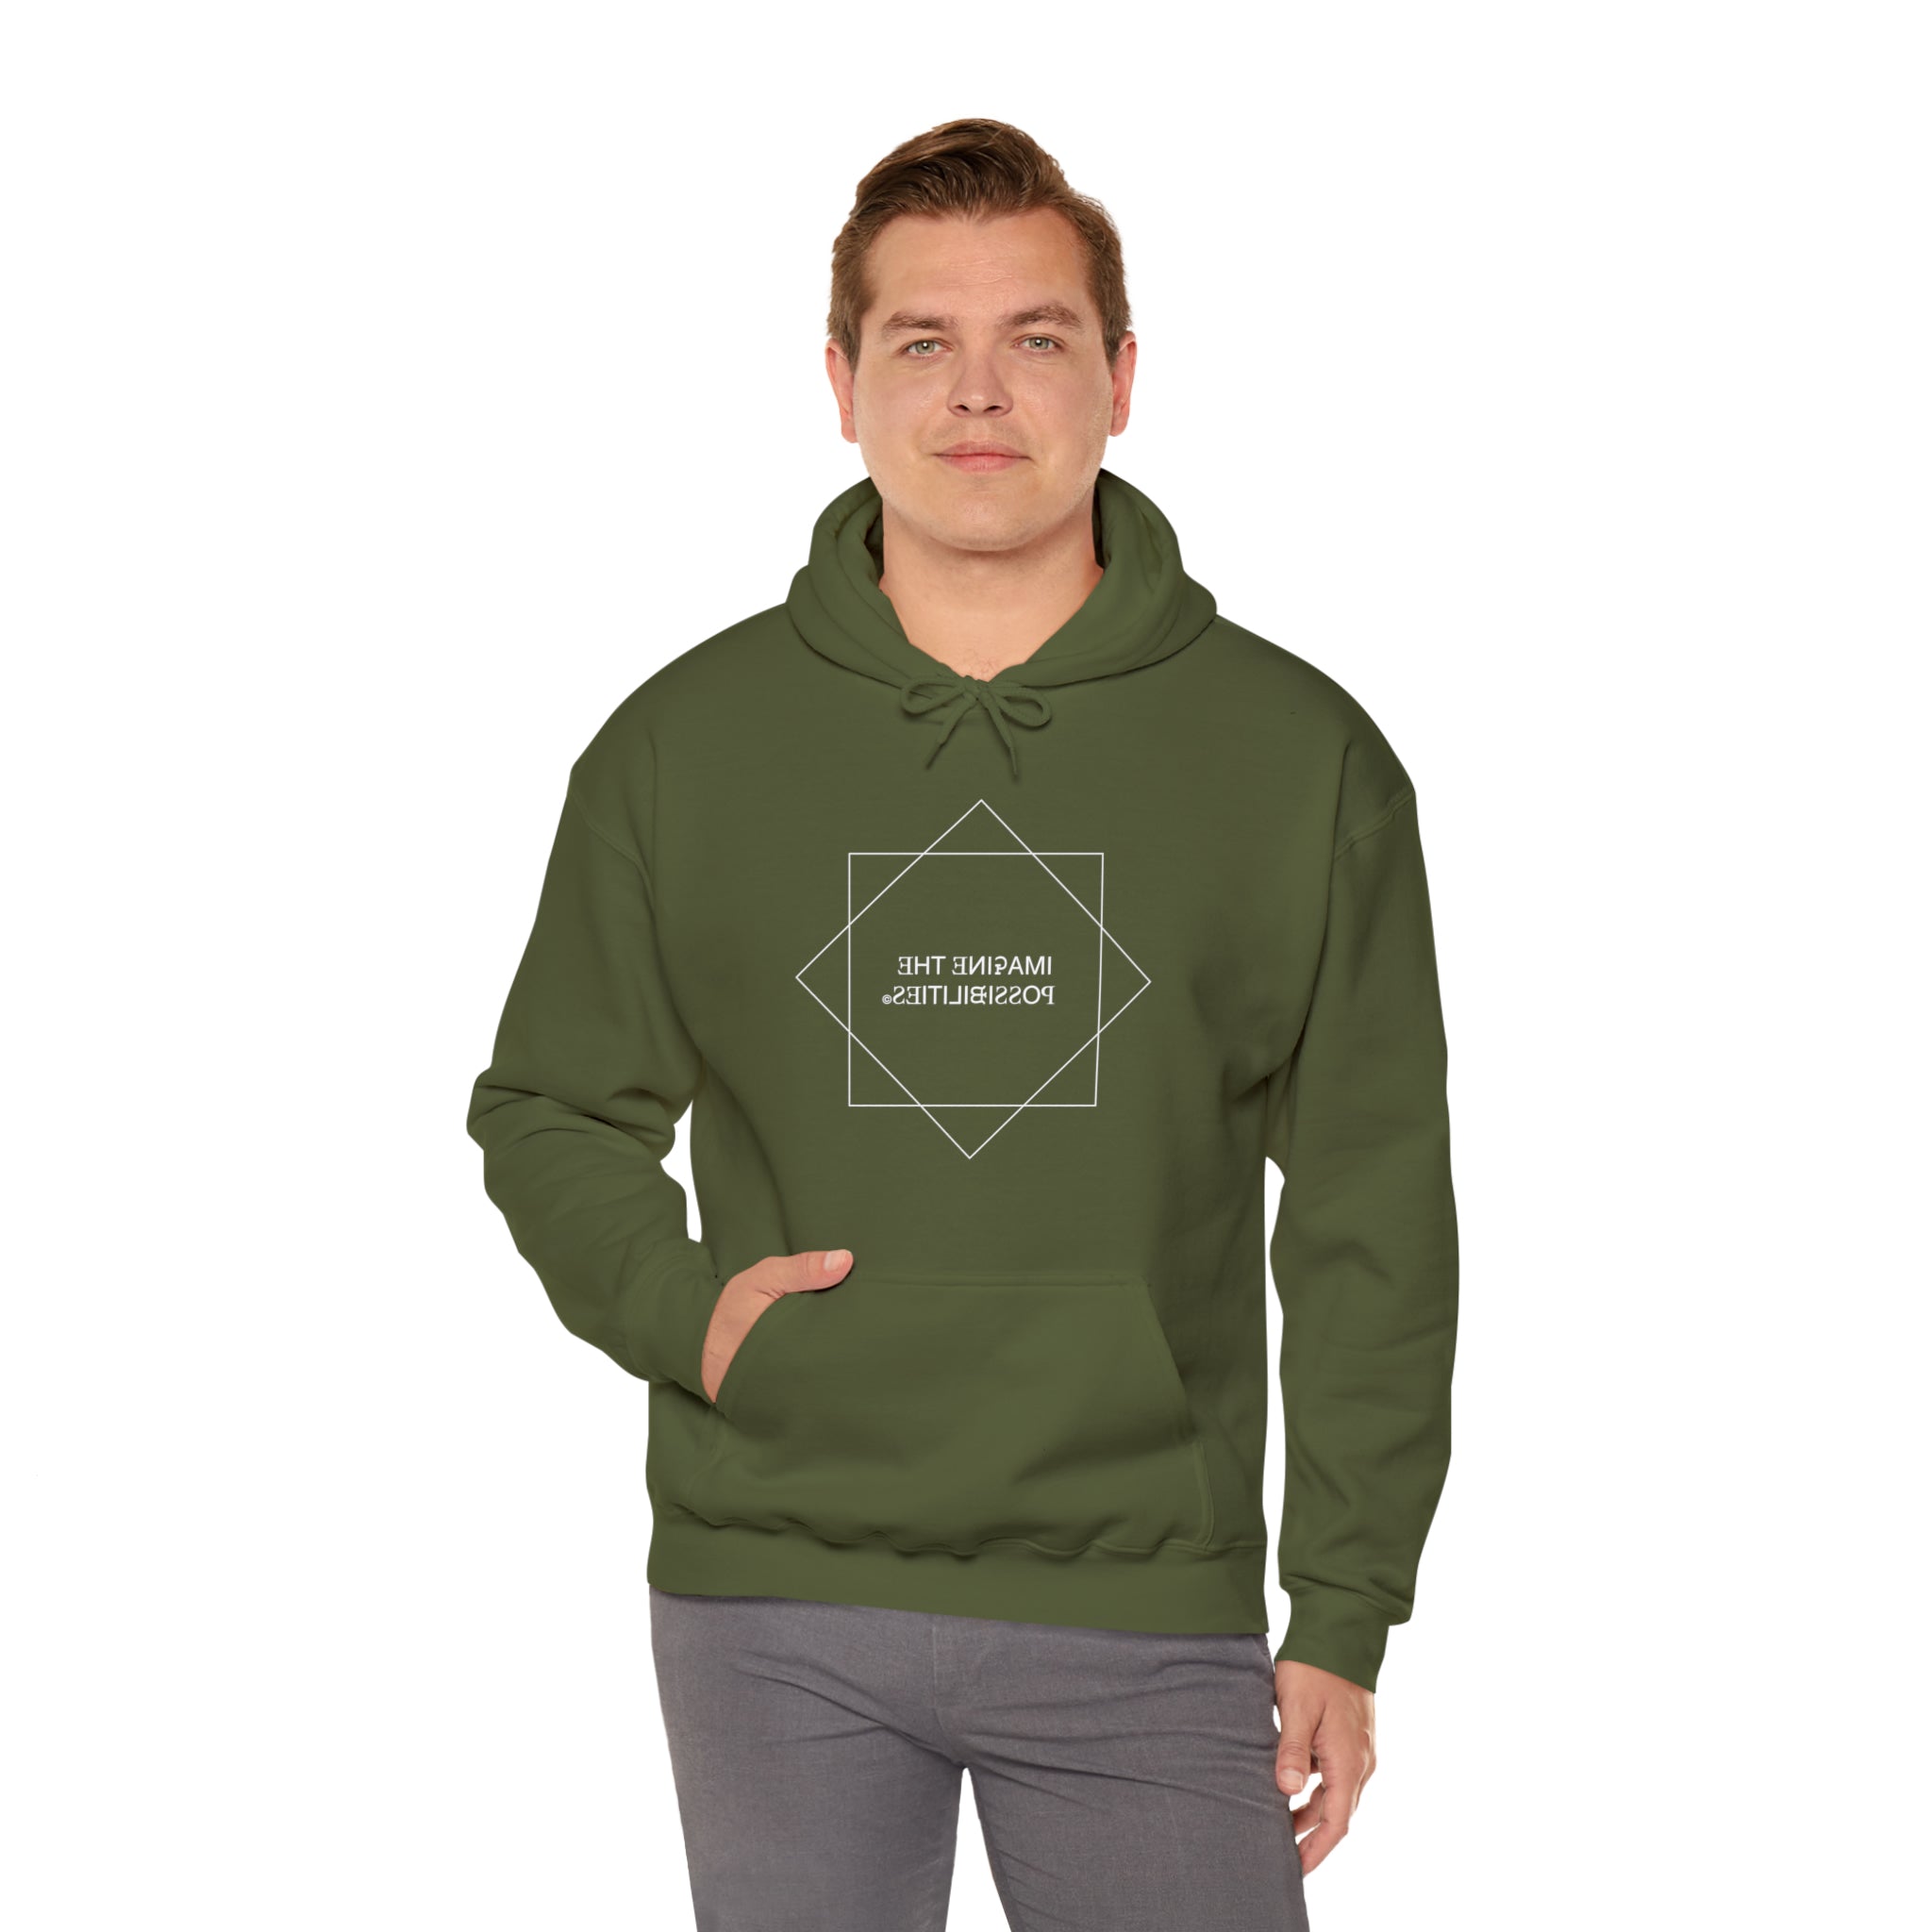 "Imagine the Possibilities" Unisex Hooded Sweatshirt